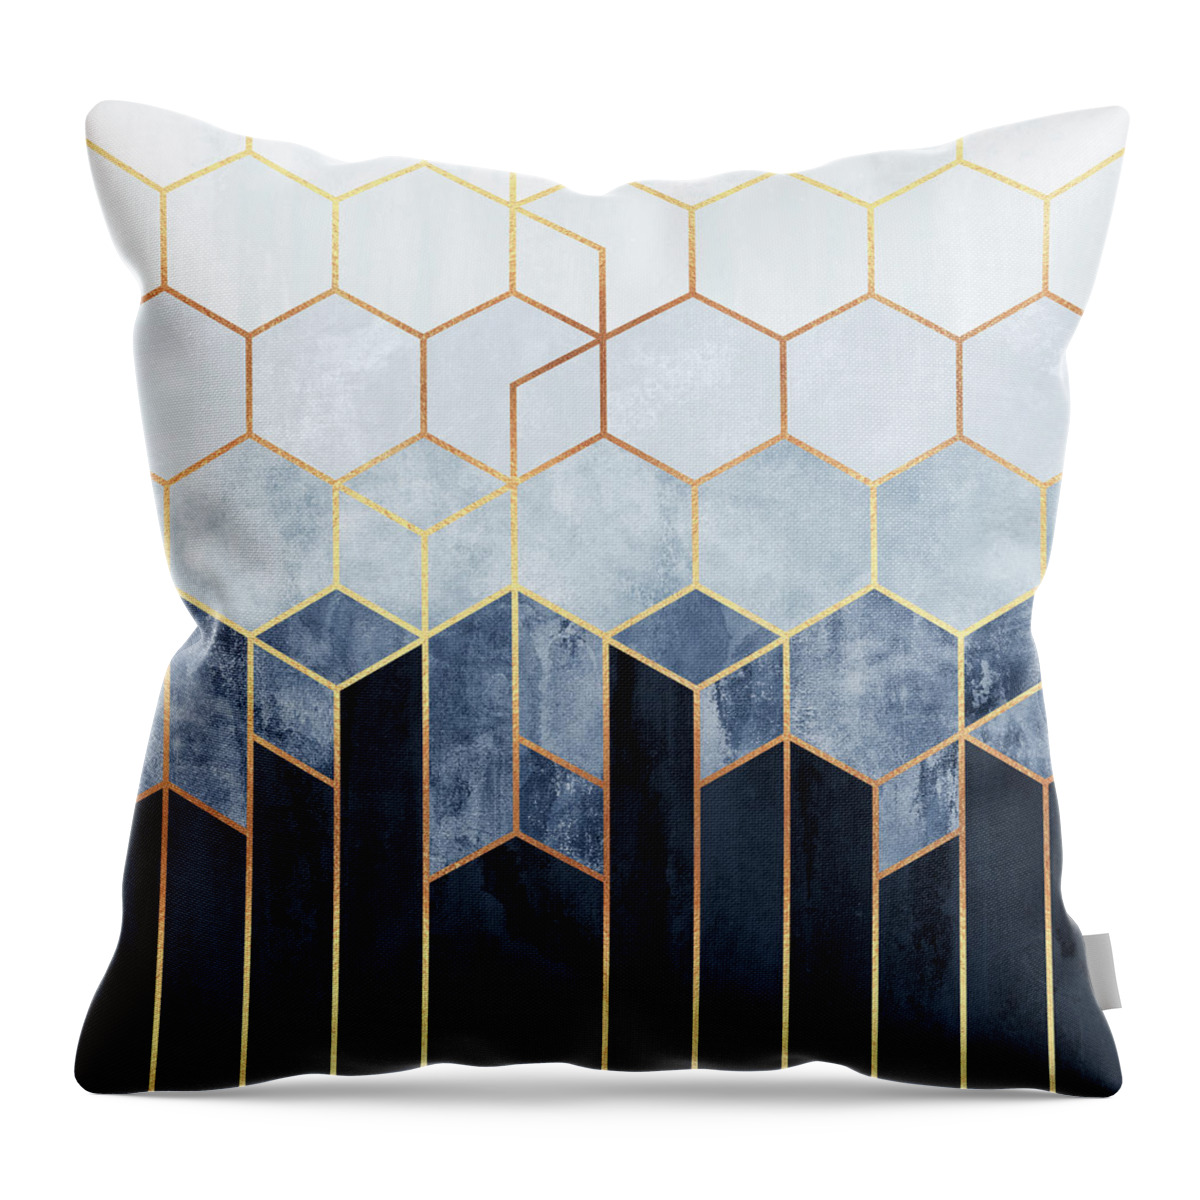 #faatoppicks Throw Pillow featuring the digital art Soft Blue Hexagons by Elisabeth Fredriksson